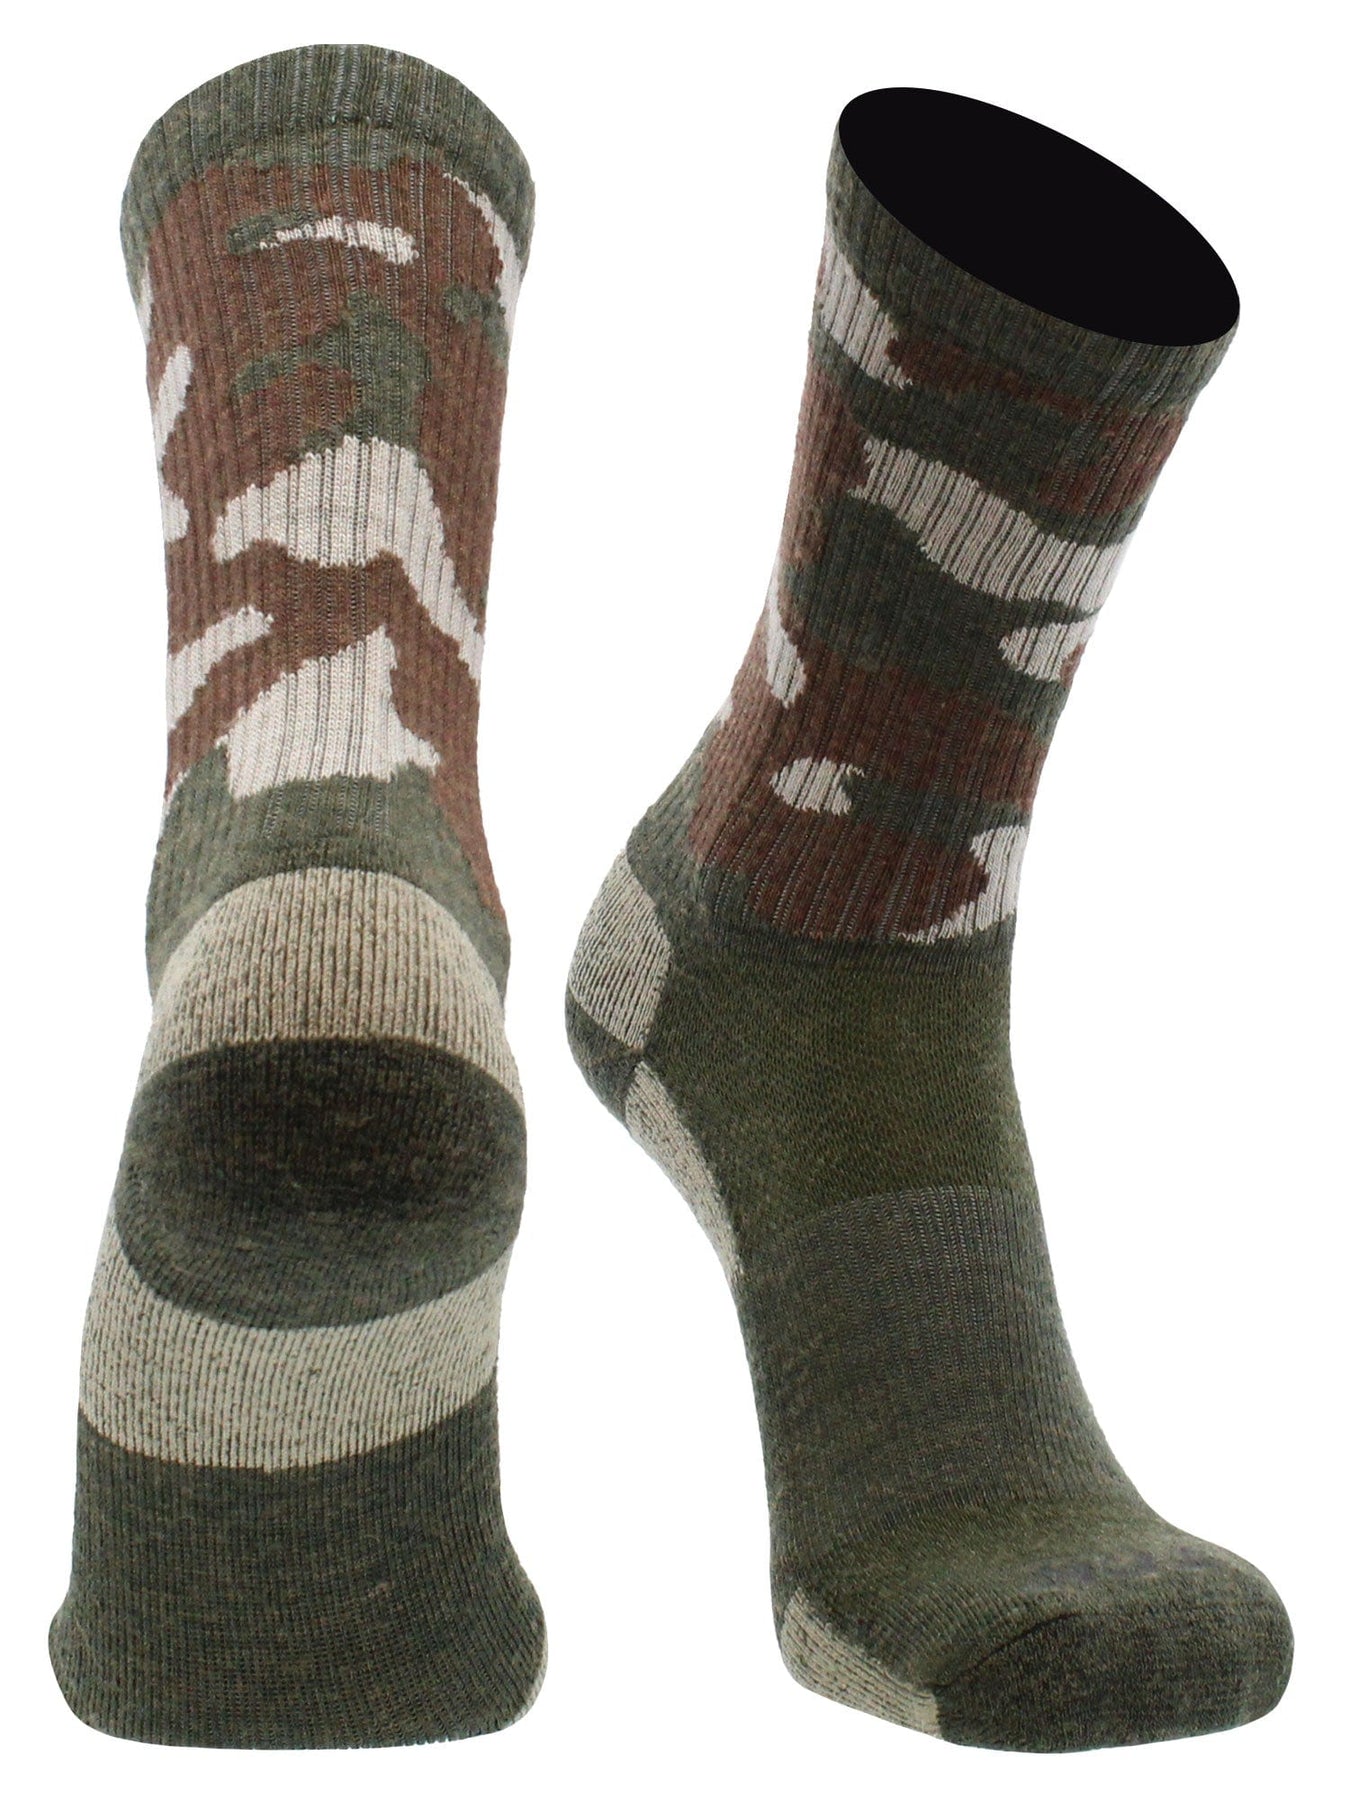 TCK Green Camo / Large Camo Merino Wool Hiking Socks For Men & Women